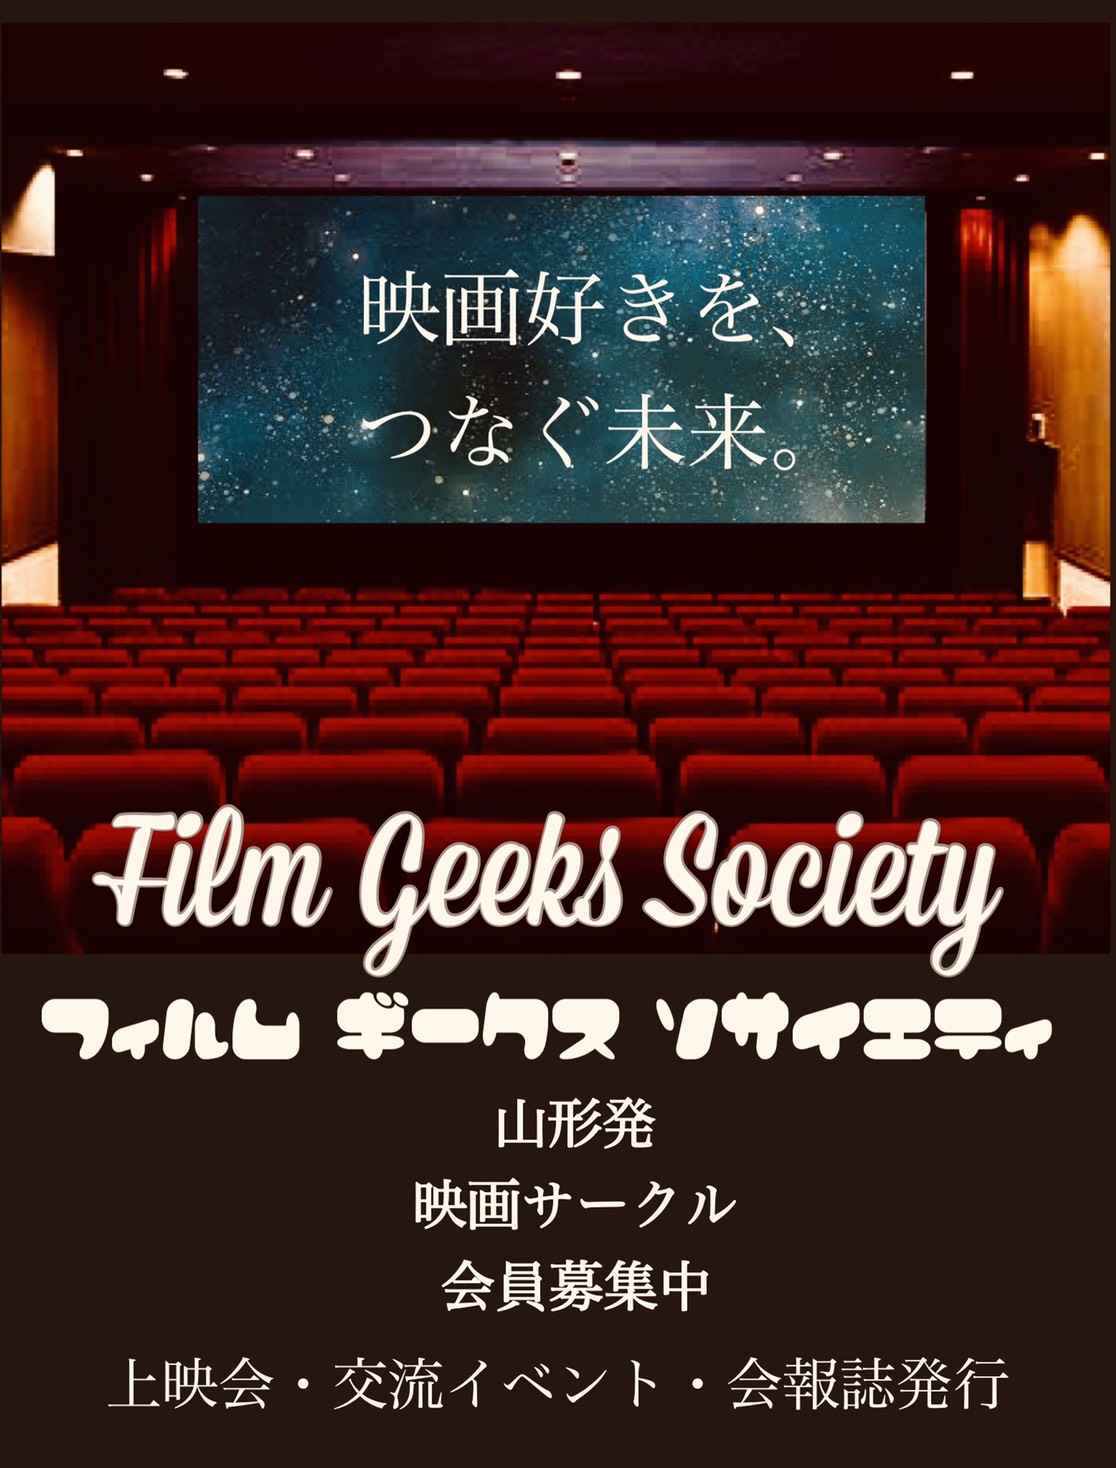 FILM GEEKS SOCIETY